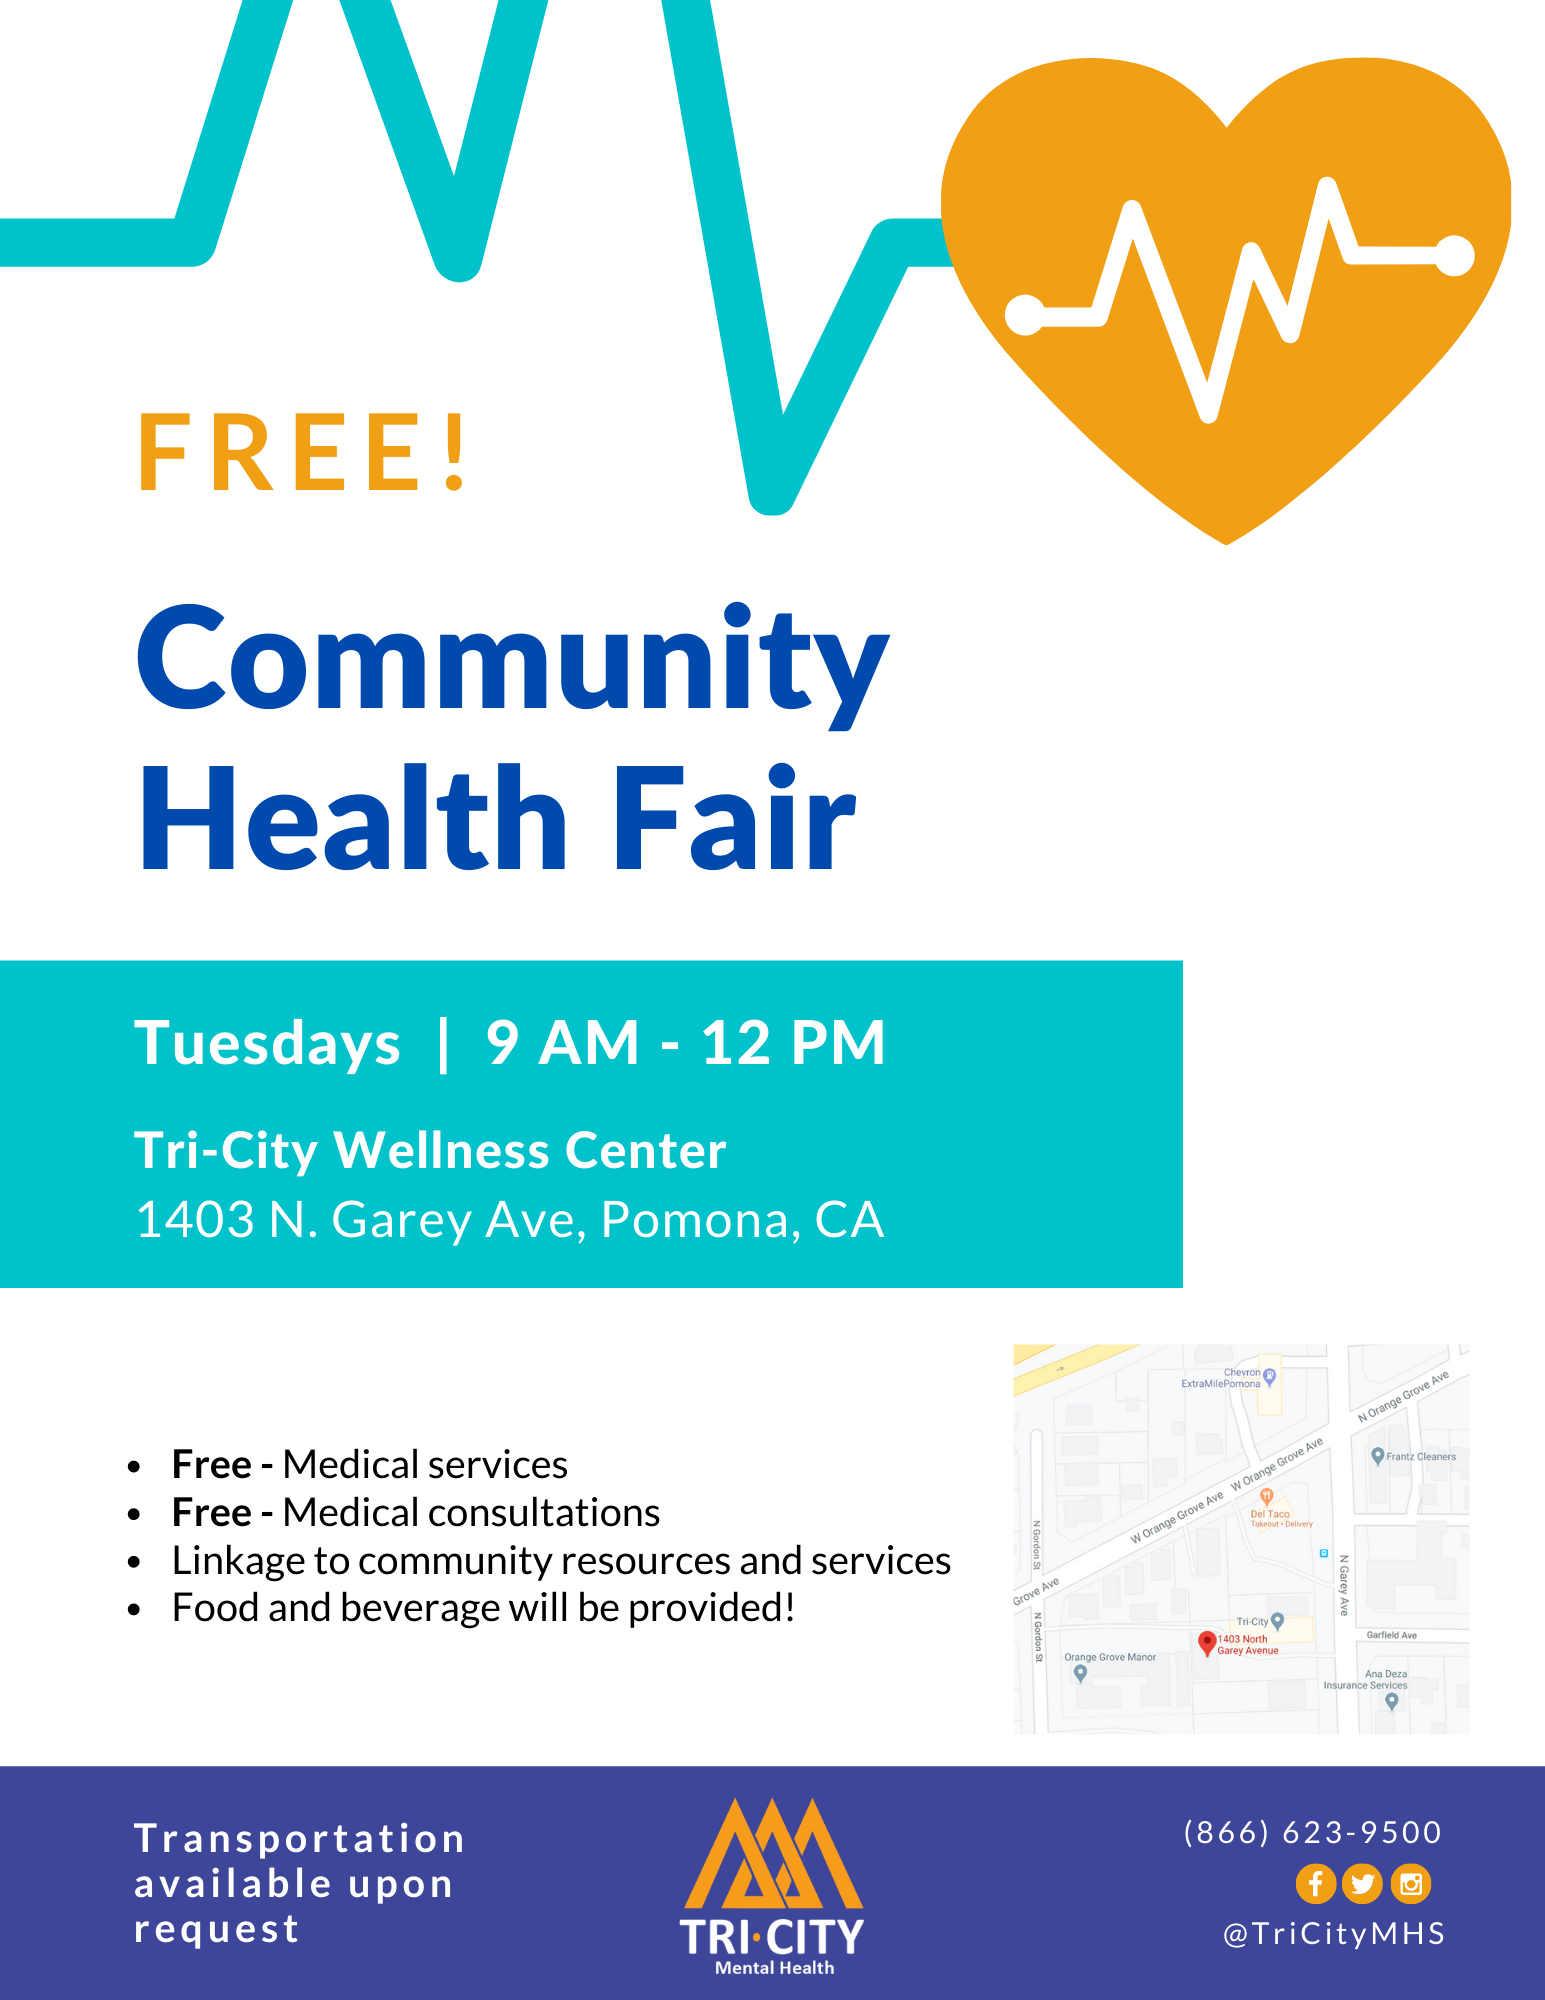 Free Community Health Fair/Gratis de Salud Comunitaria